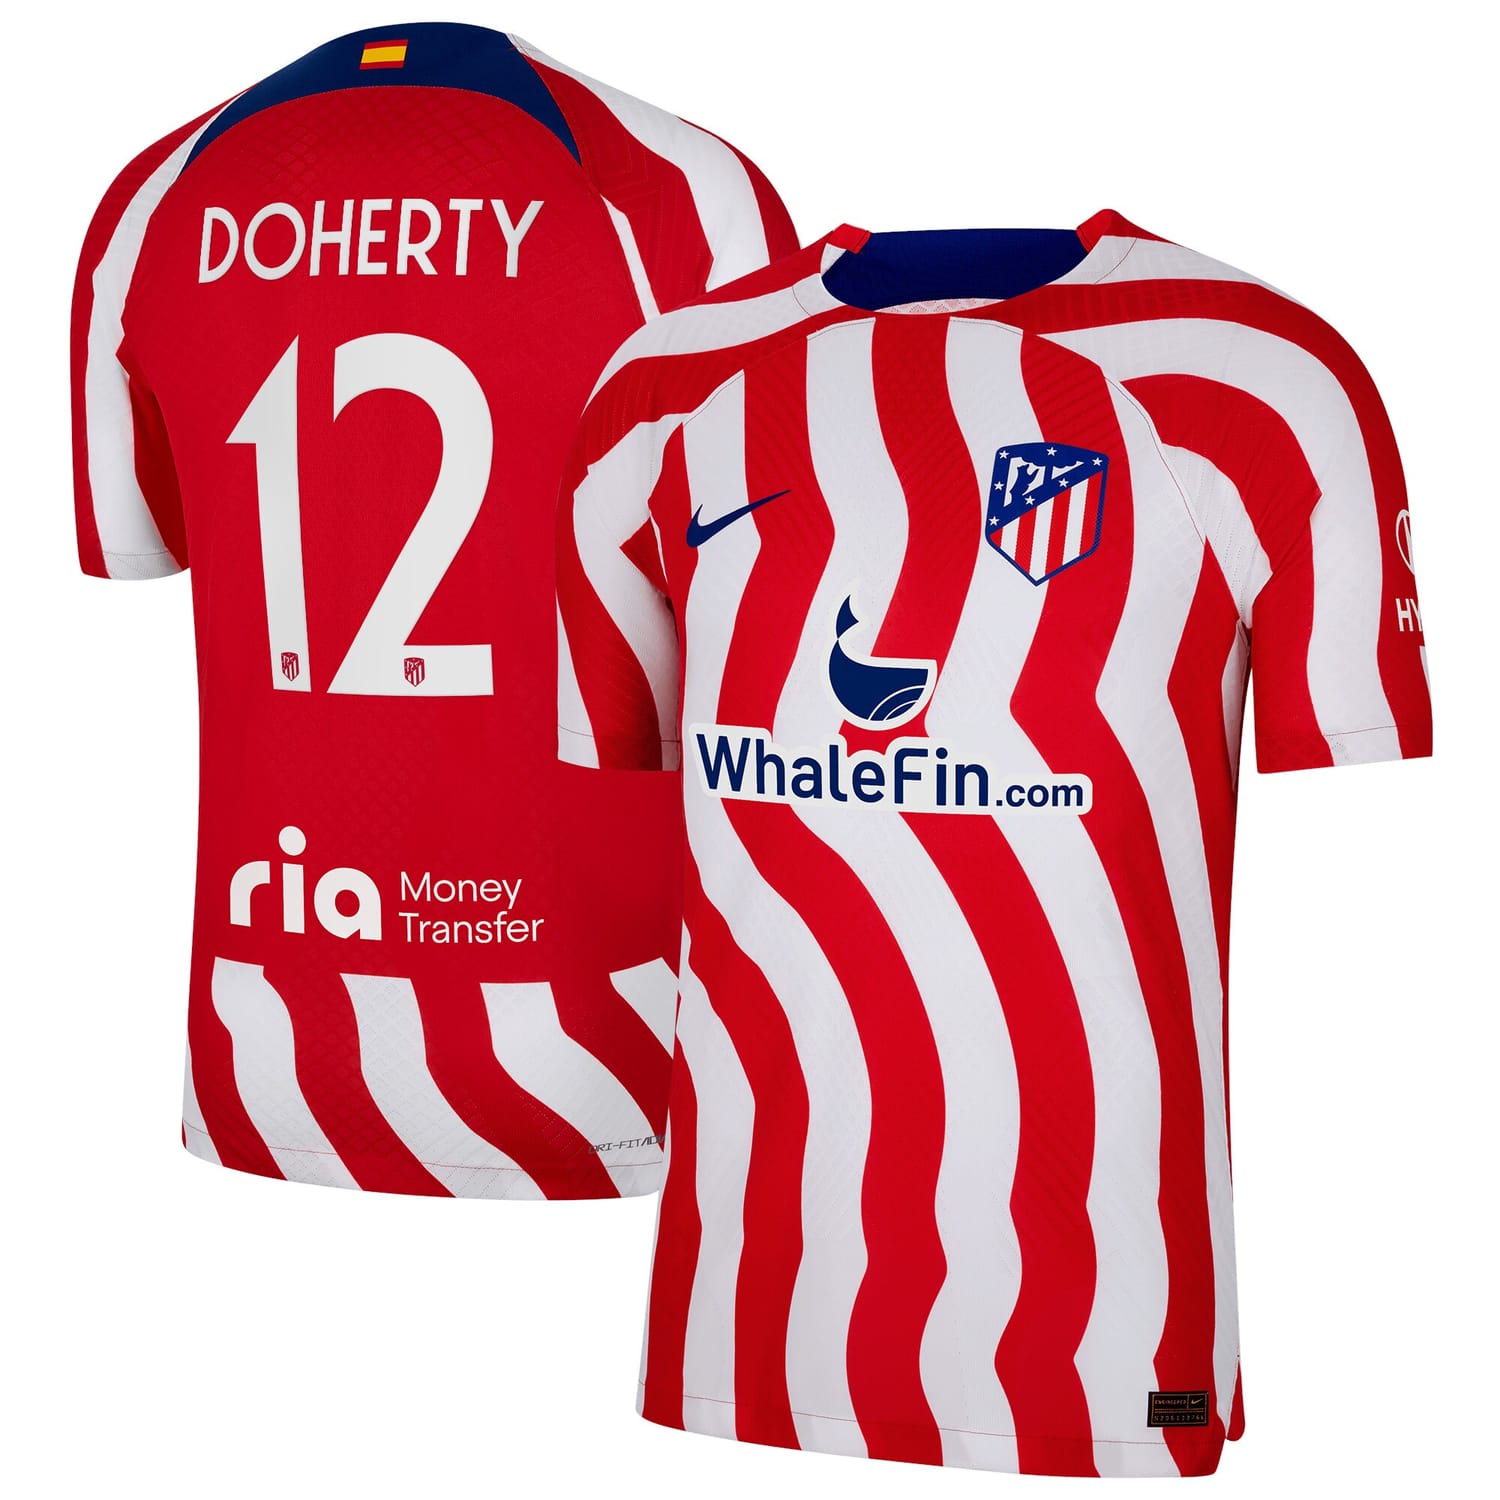 La Liga Atletico de Madrid Home Metropolitano Authentic Jersey Shirt 2022-23 player Matt Doherty 12 printing for Men